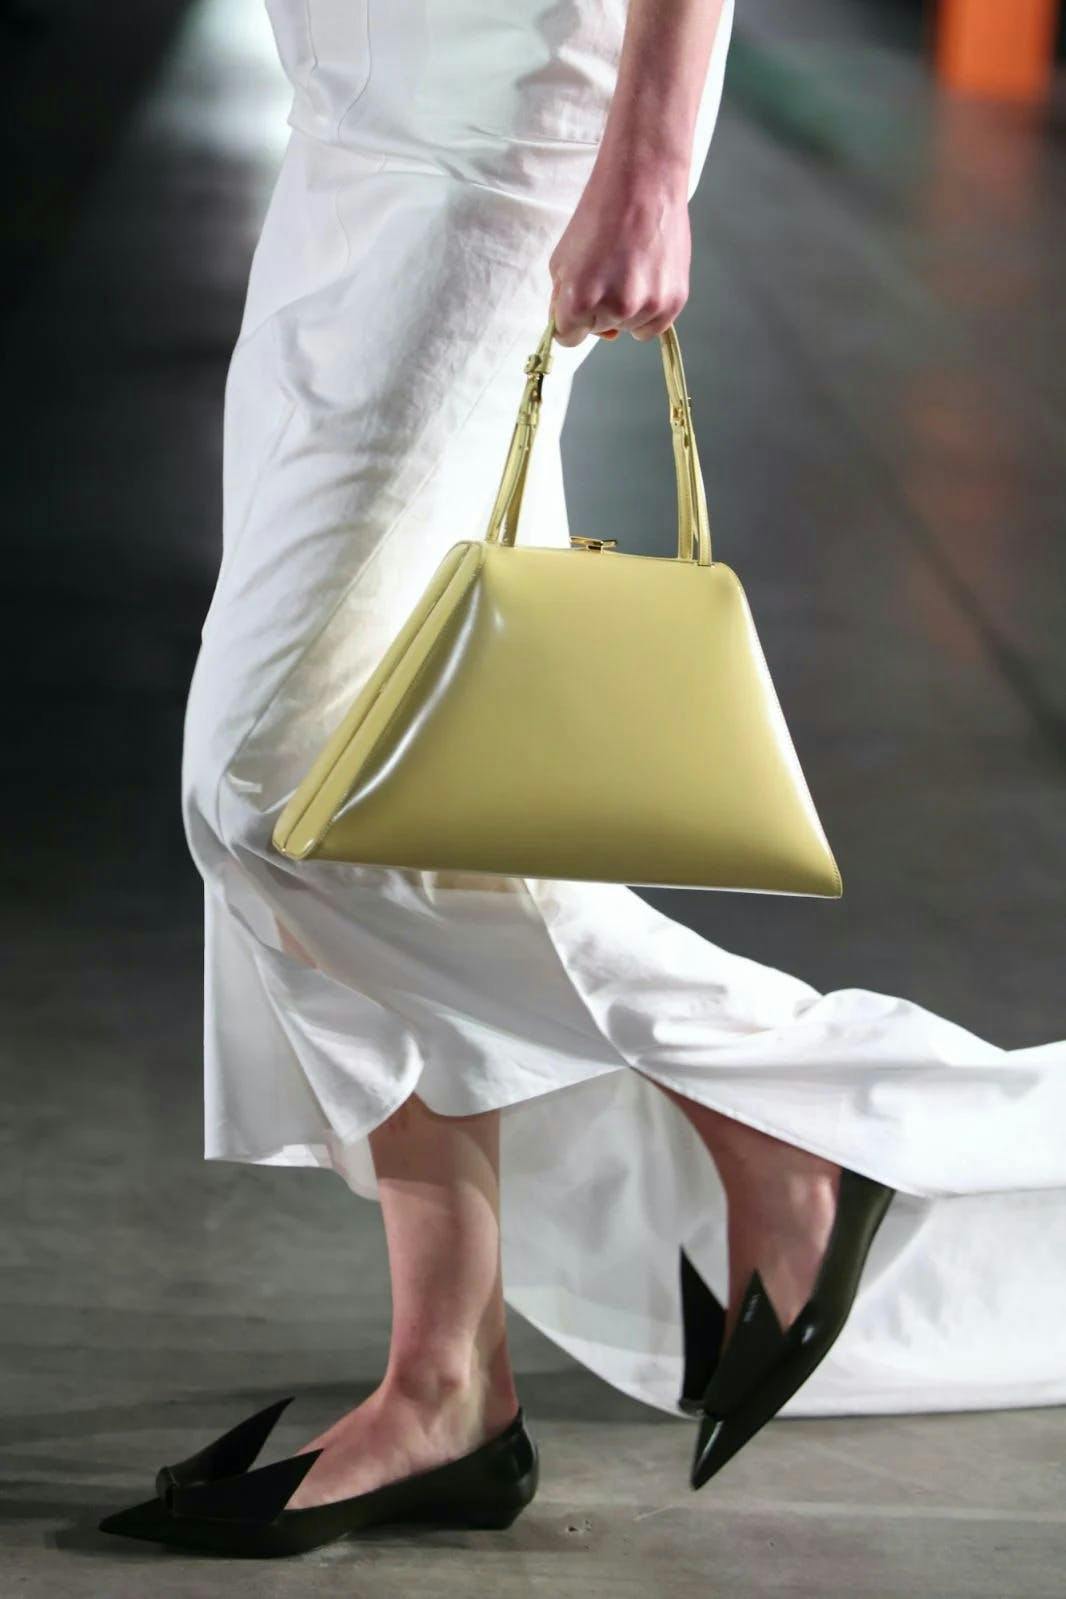 accessories bag handbag clothing footwear shoe high heel purse